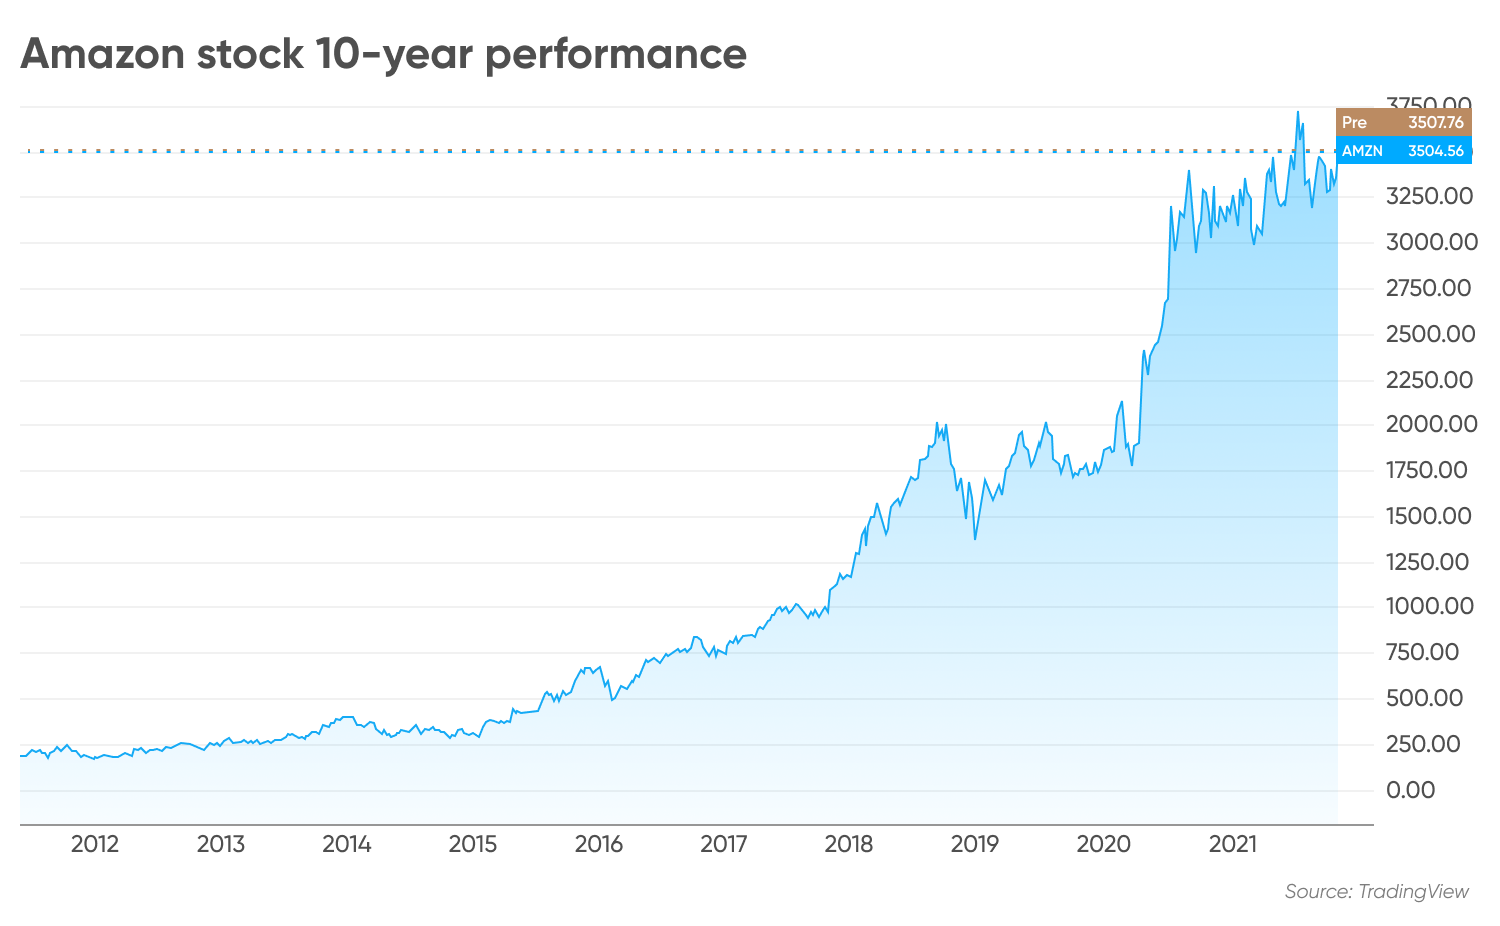 Amazon stock price prediction in 5 years